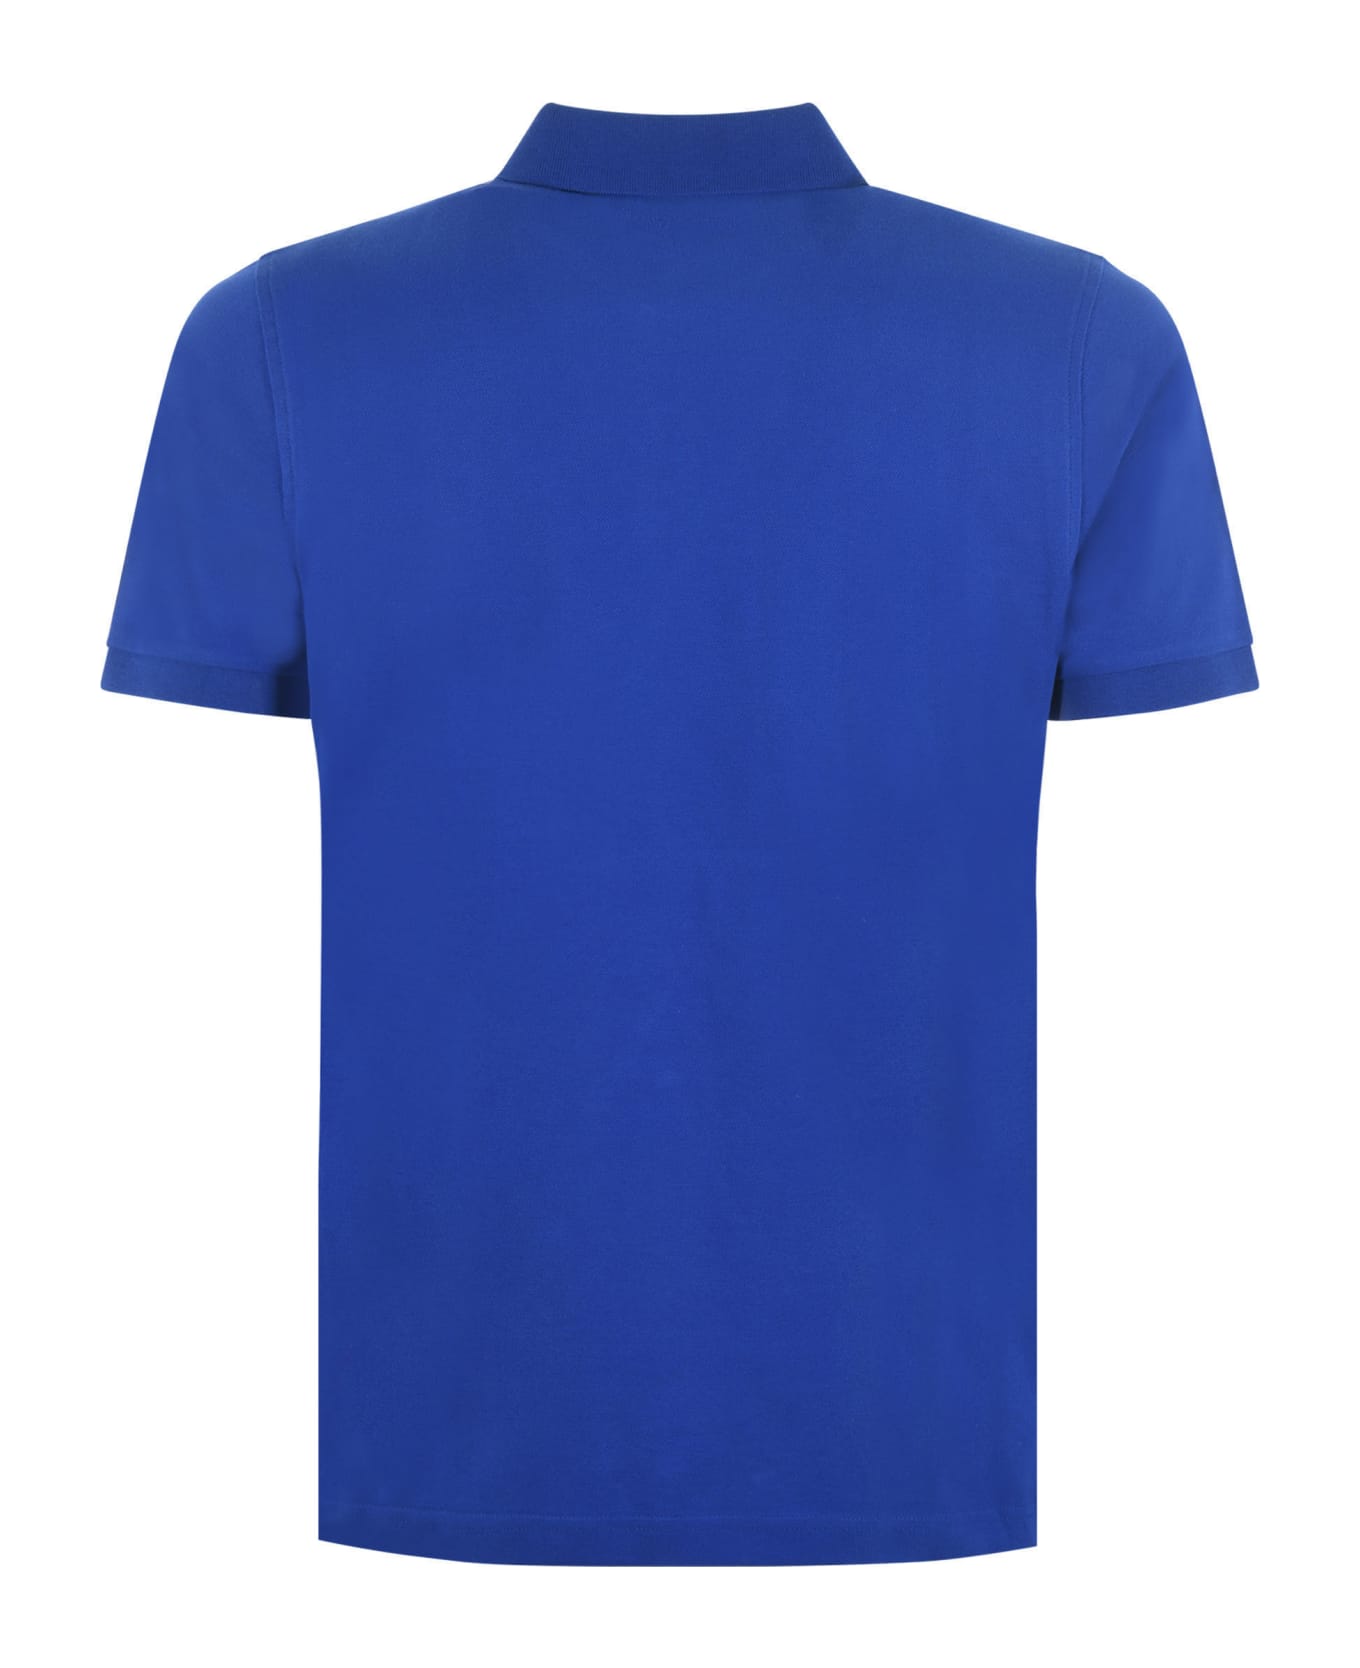 Fay Classic Polo Shirt - BLUE